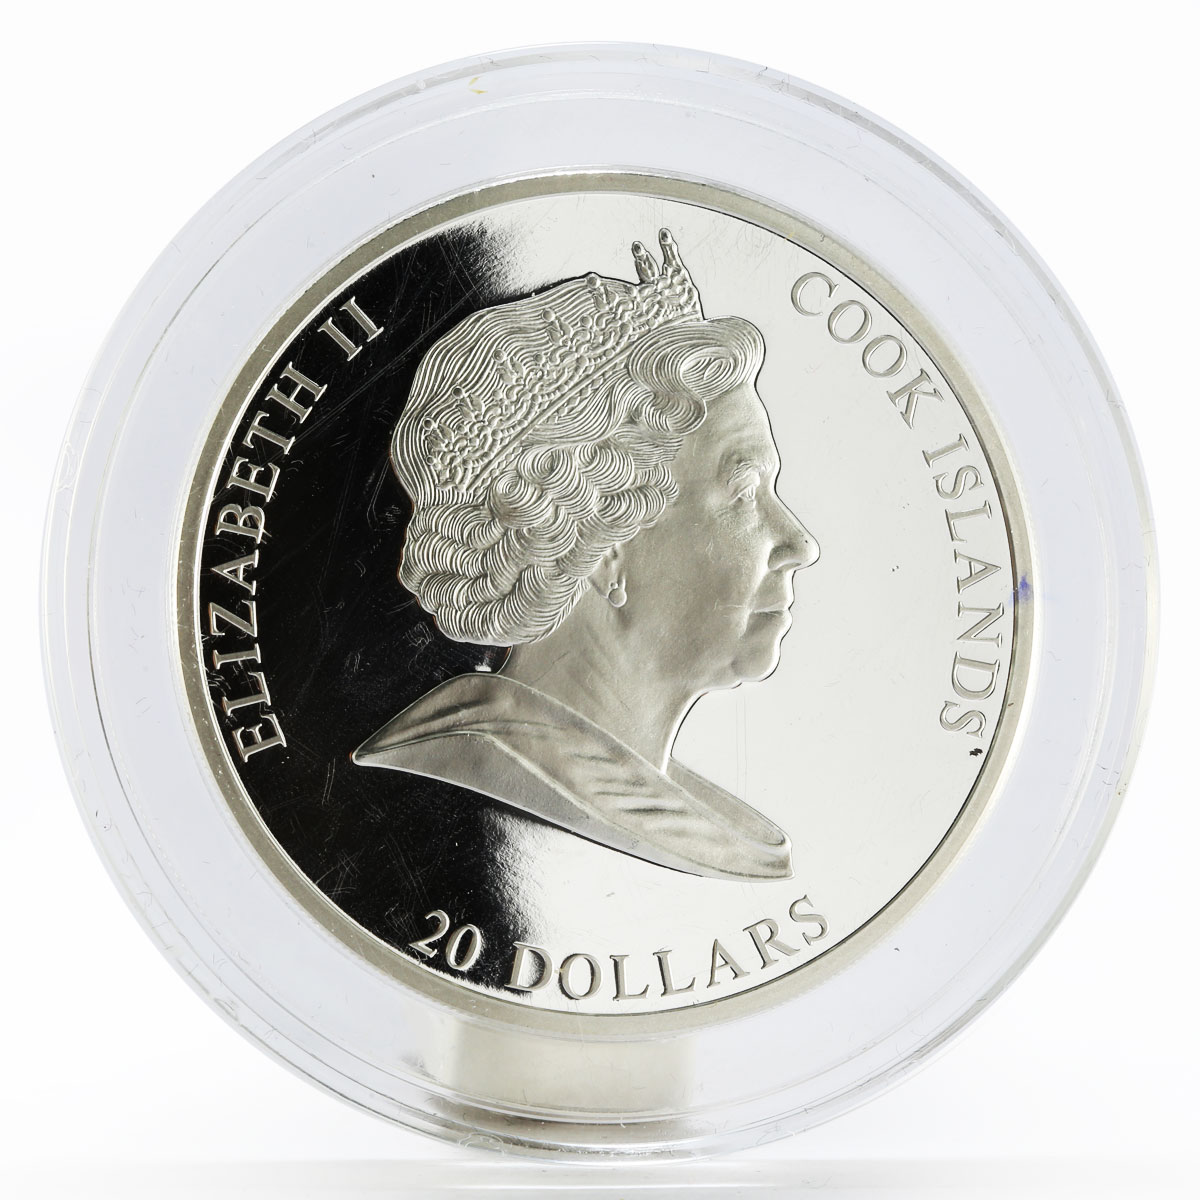 Cook Islands 20 dollars Raffael Santi Art The School of Athens silver coin 2010